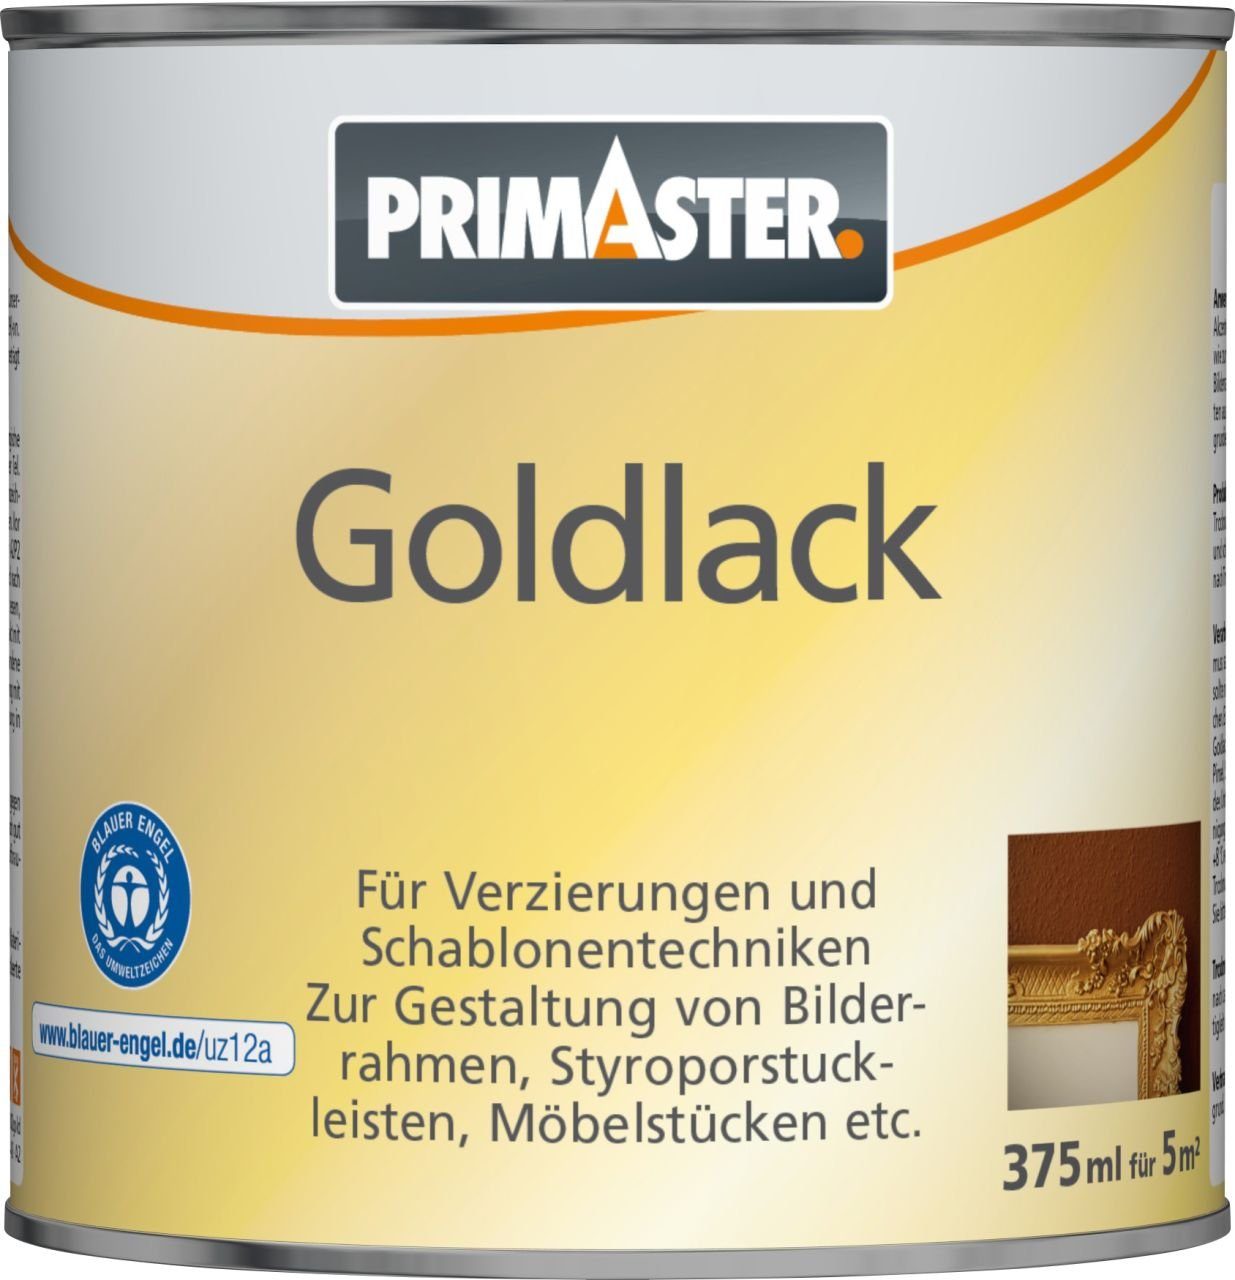 Primaster Lack Goldlack savoir 375 Primaster ml vivre